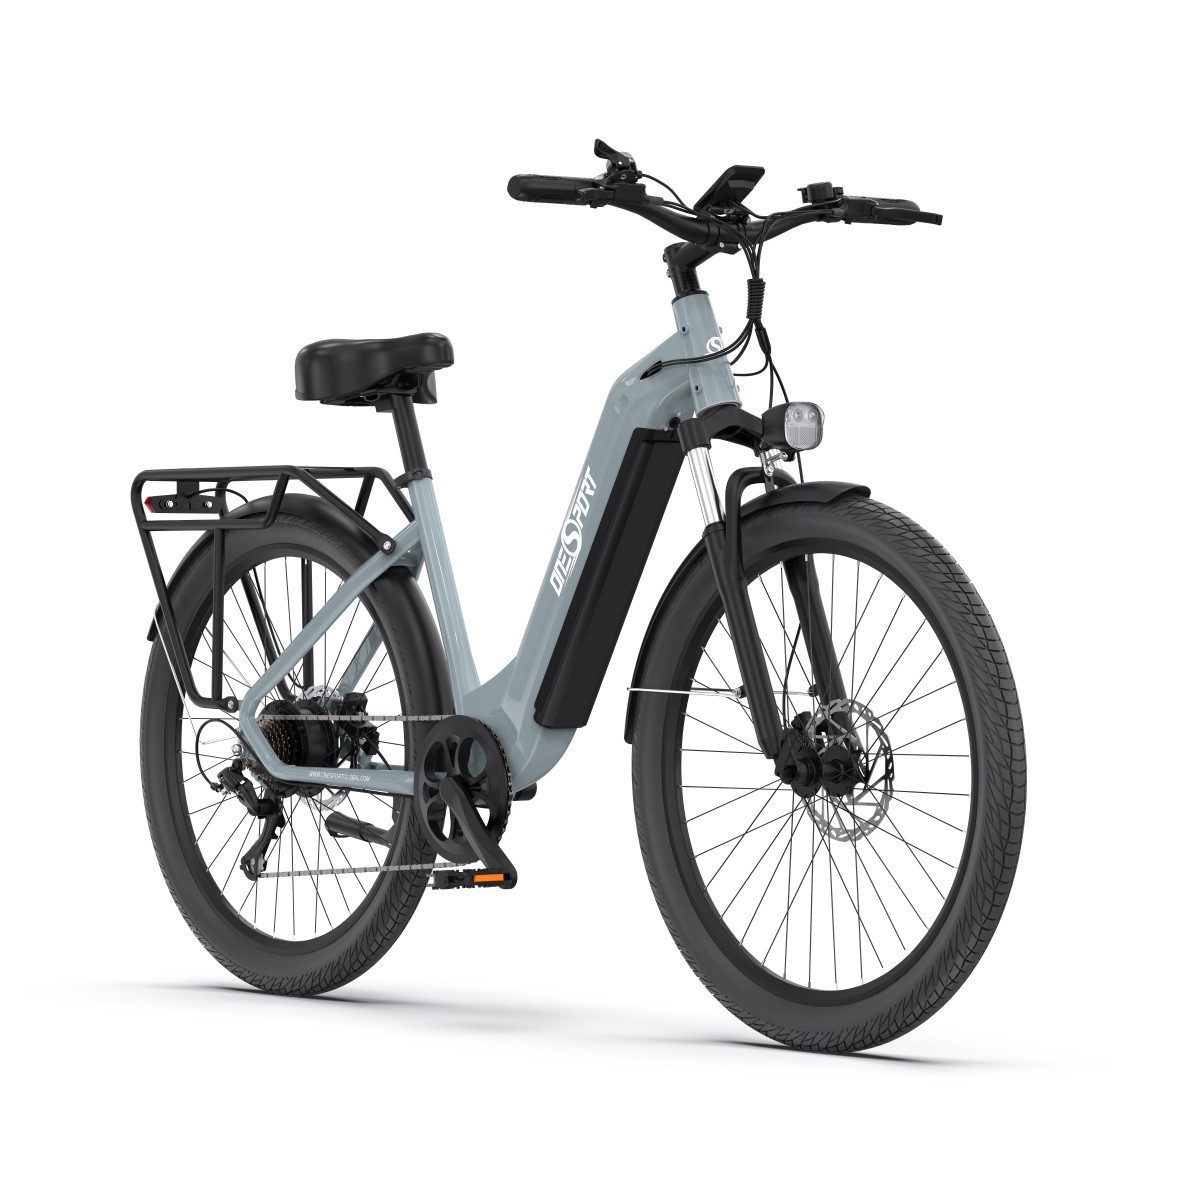 DOTMALL E-Bike ONESPORT OT05, 27,5” Elektrofahrrad, 36V 18.2AH Akku, intuitivem LCD